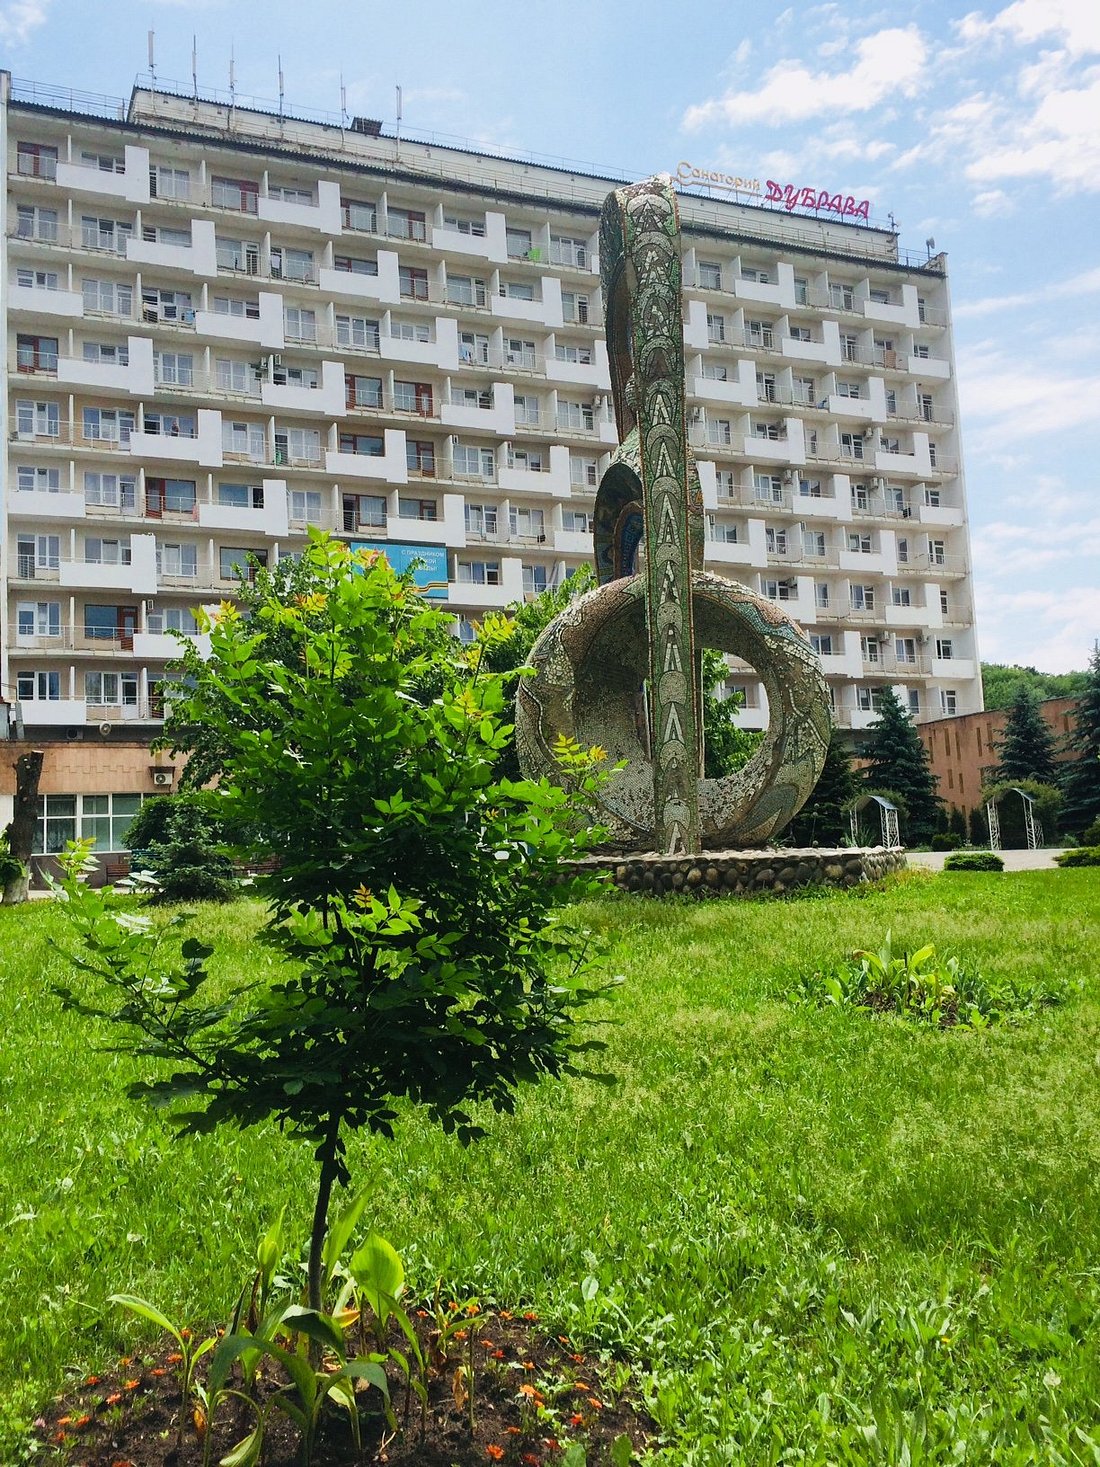 DUBRAVA - Russian Health Resort Reviews (Zheleznovodsk, Russia)